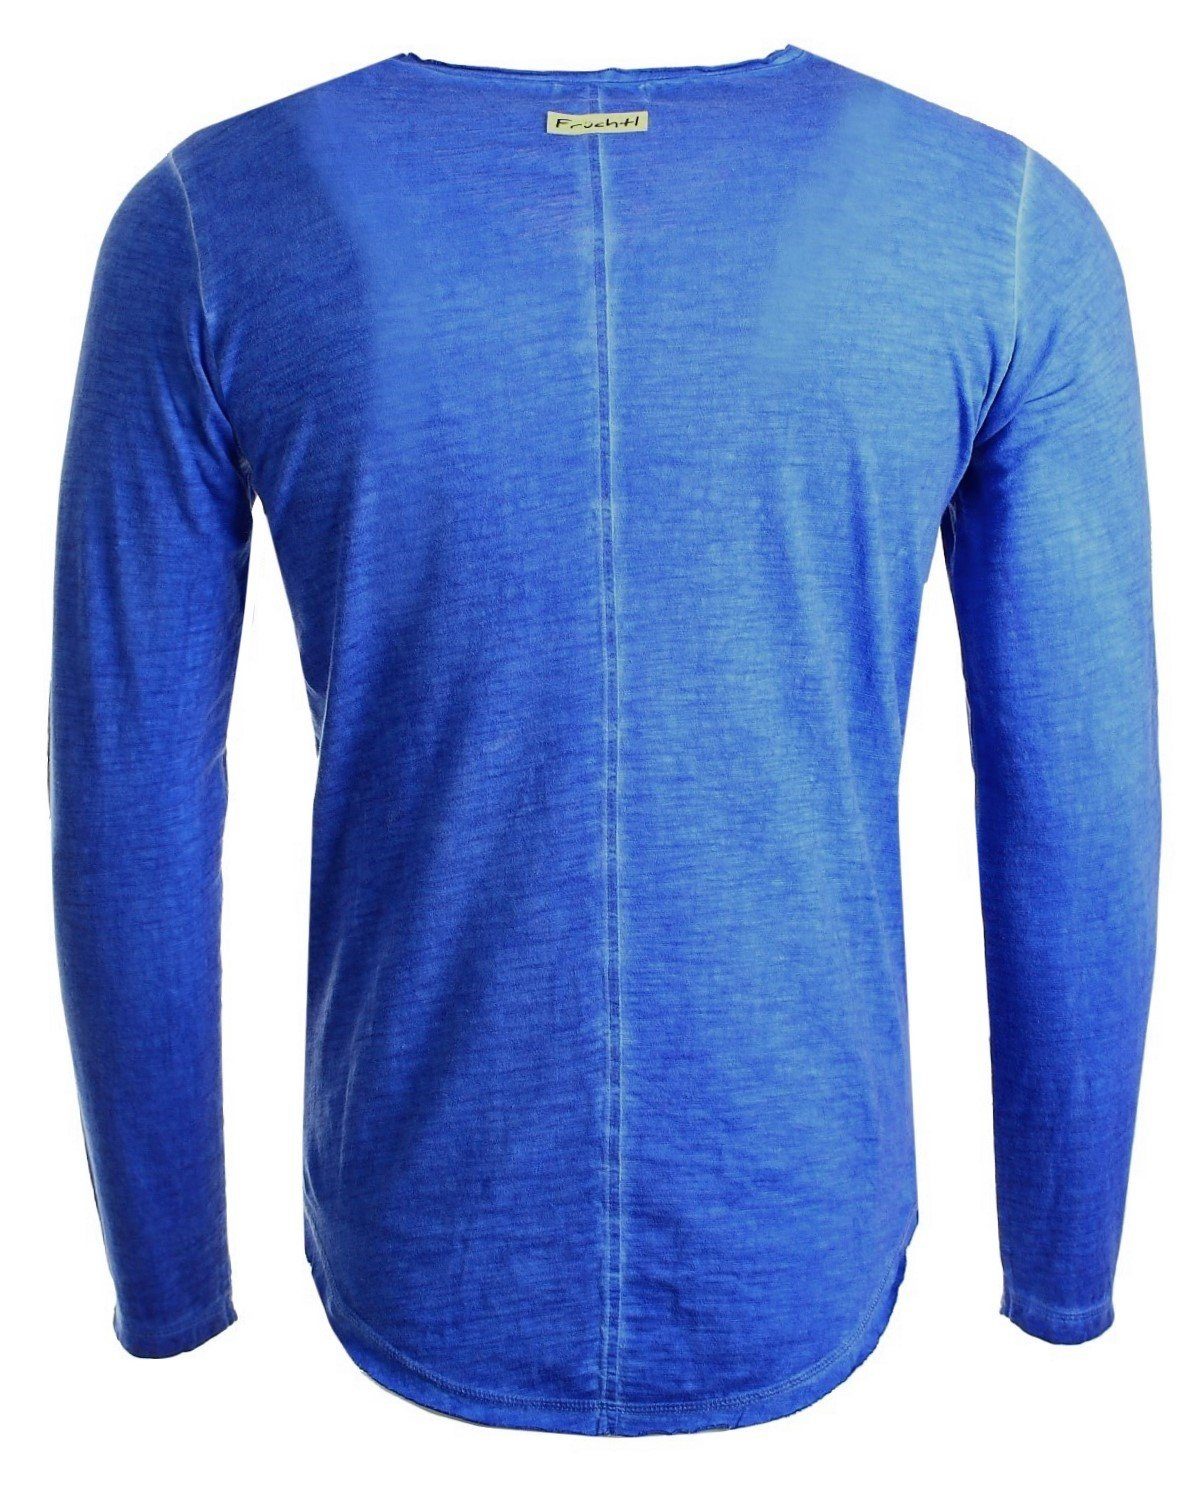 Waschung Longshirt Vintage blau Longsleeve Früchtl Langarmshirt mit